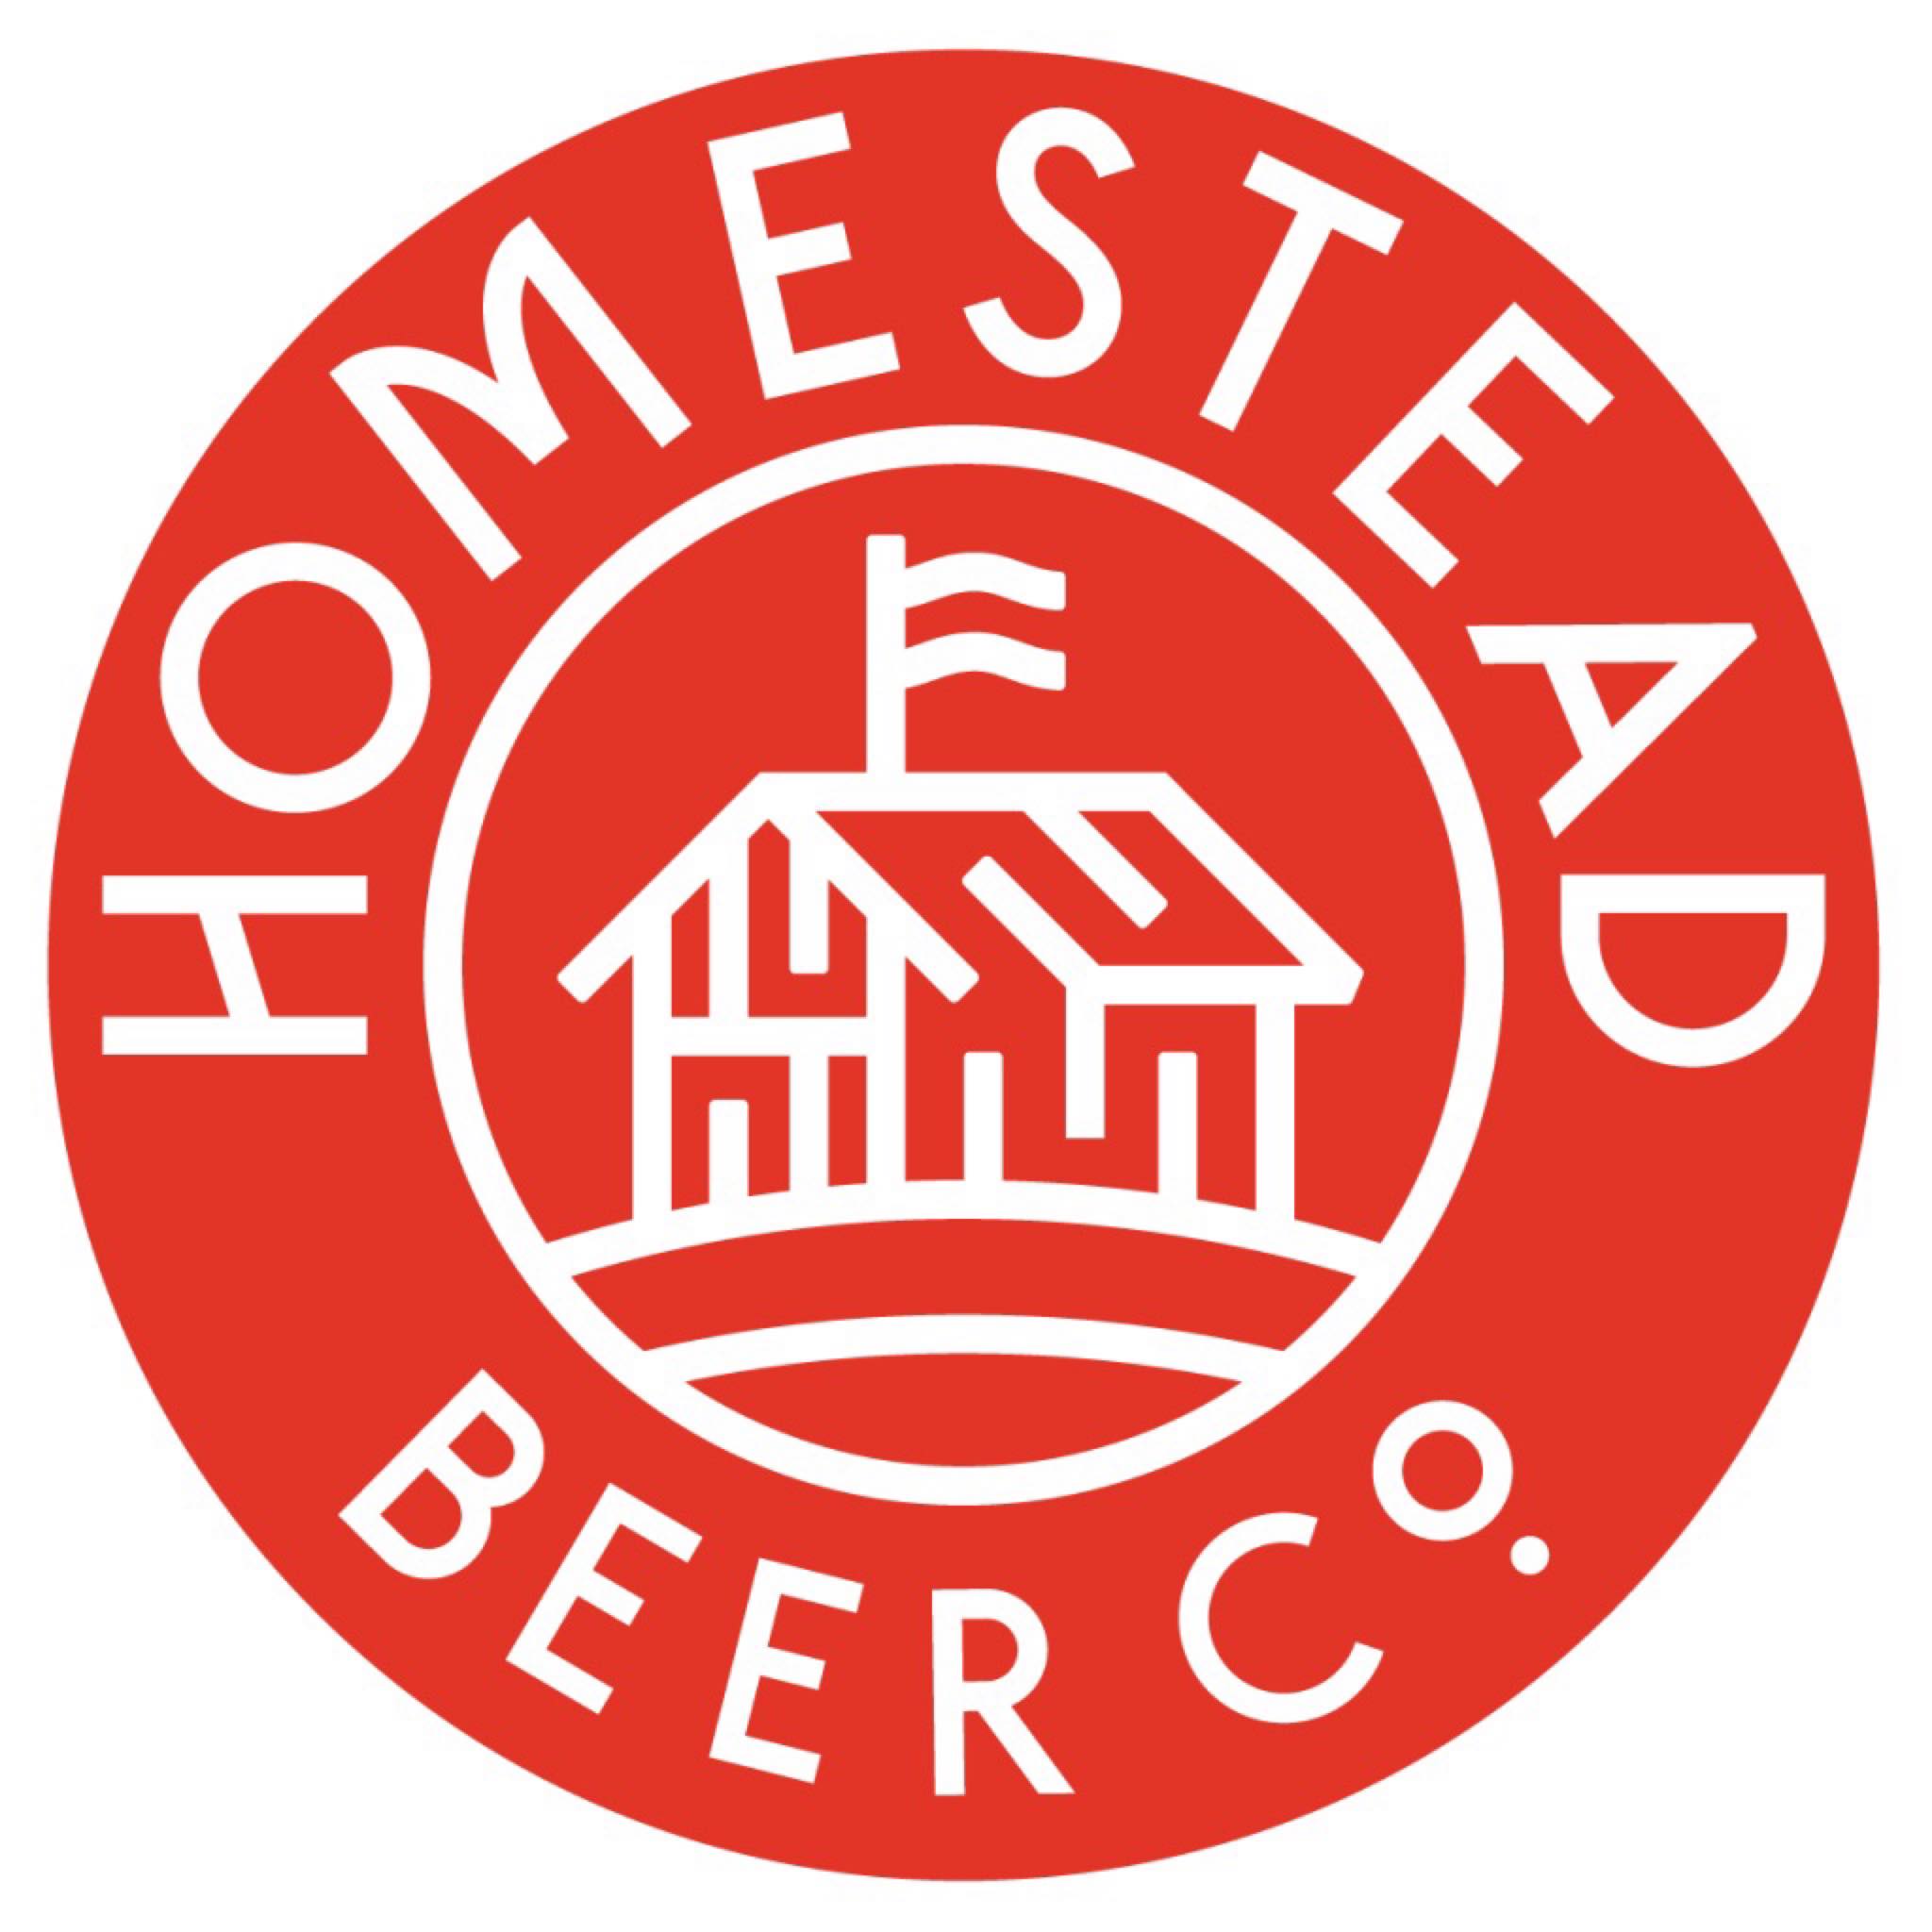 Homestead Beer Co logo